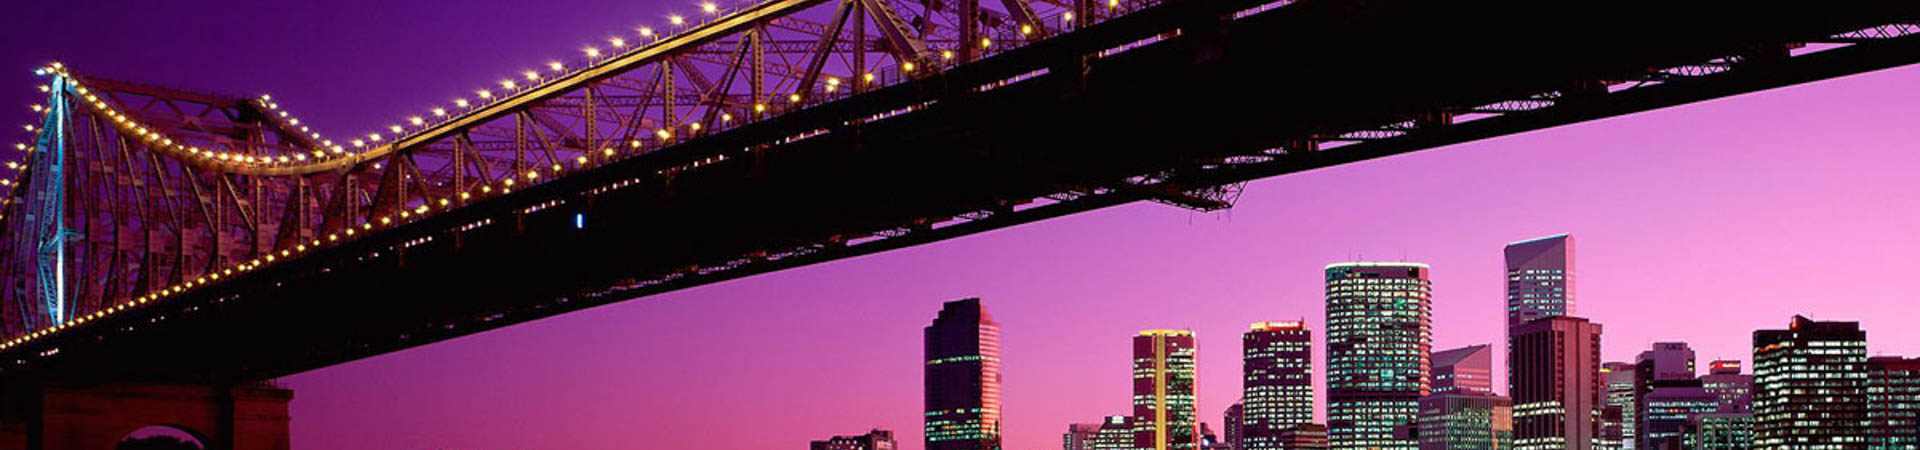 Skyline - Brisbane, Australia